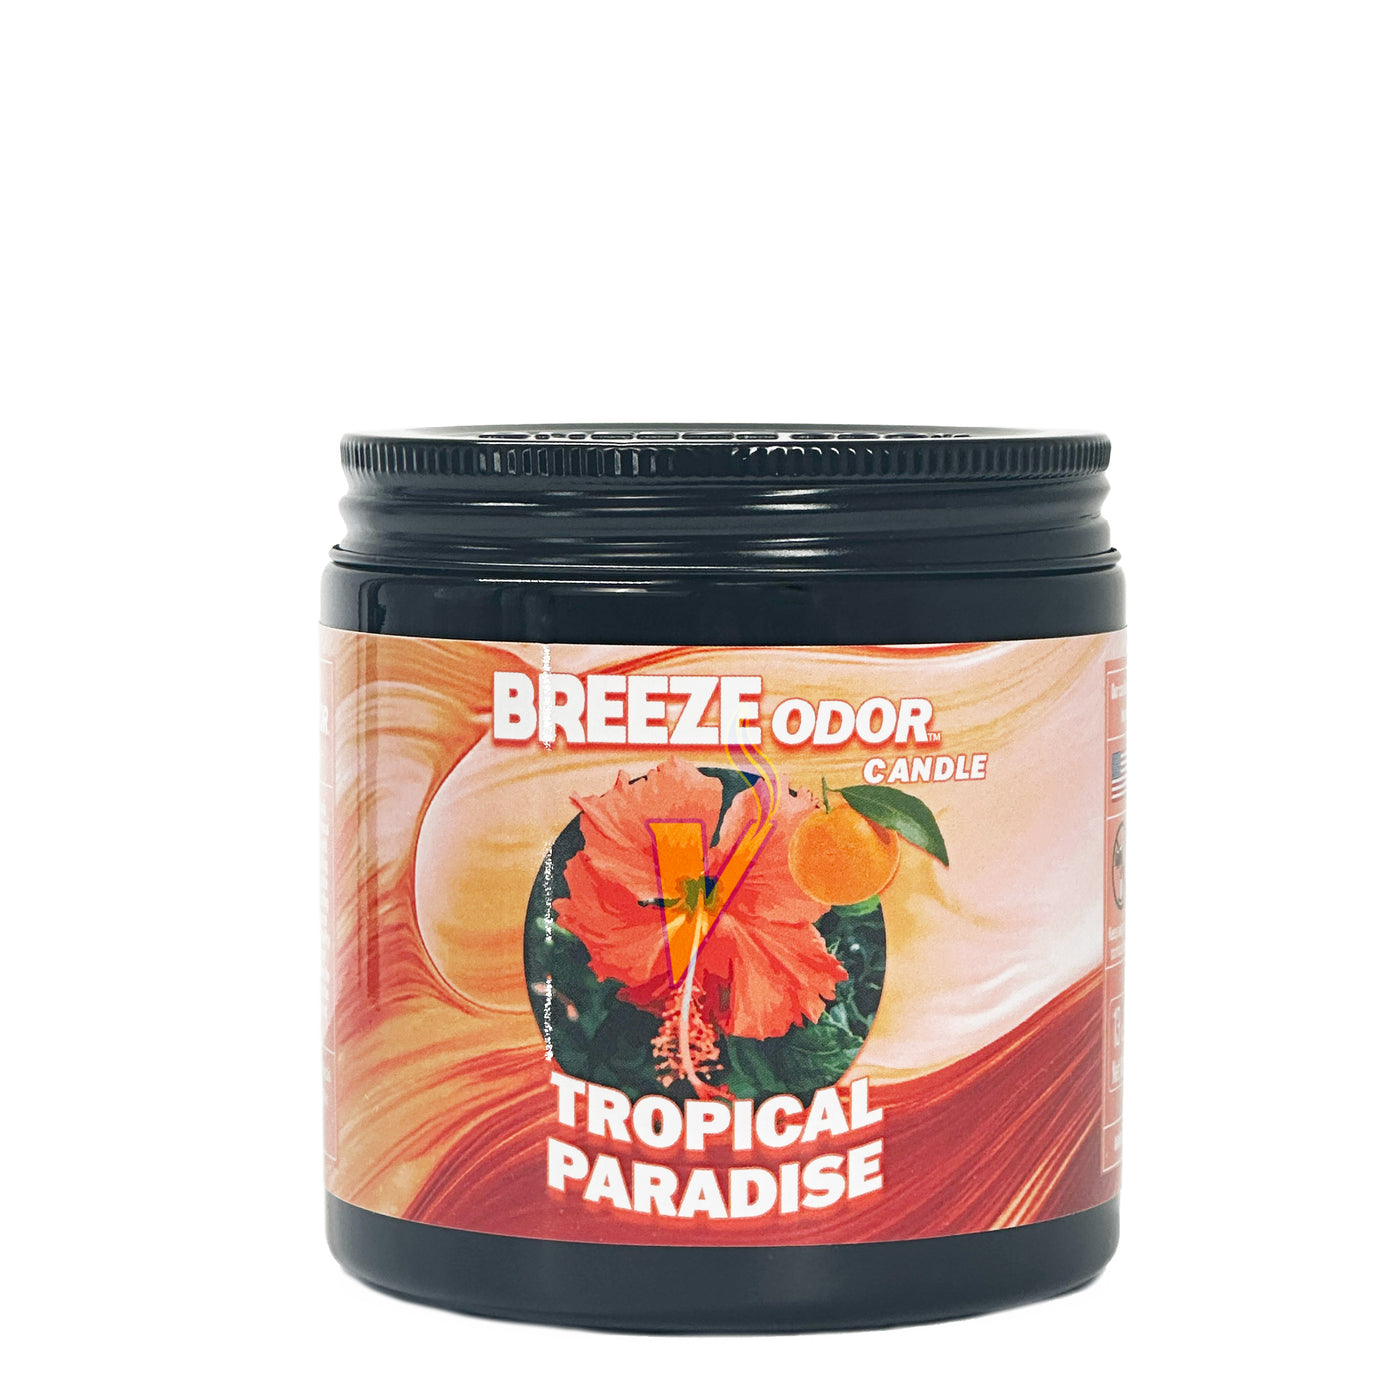 Breeze Odor Candle